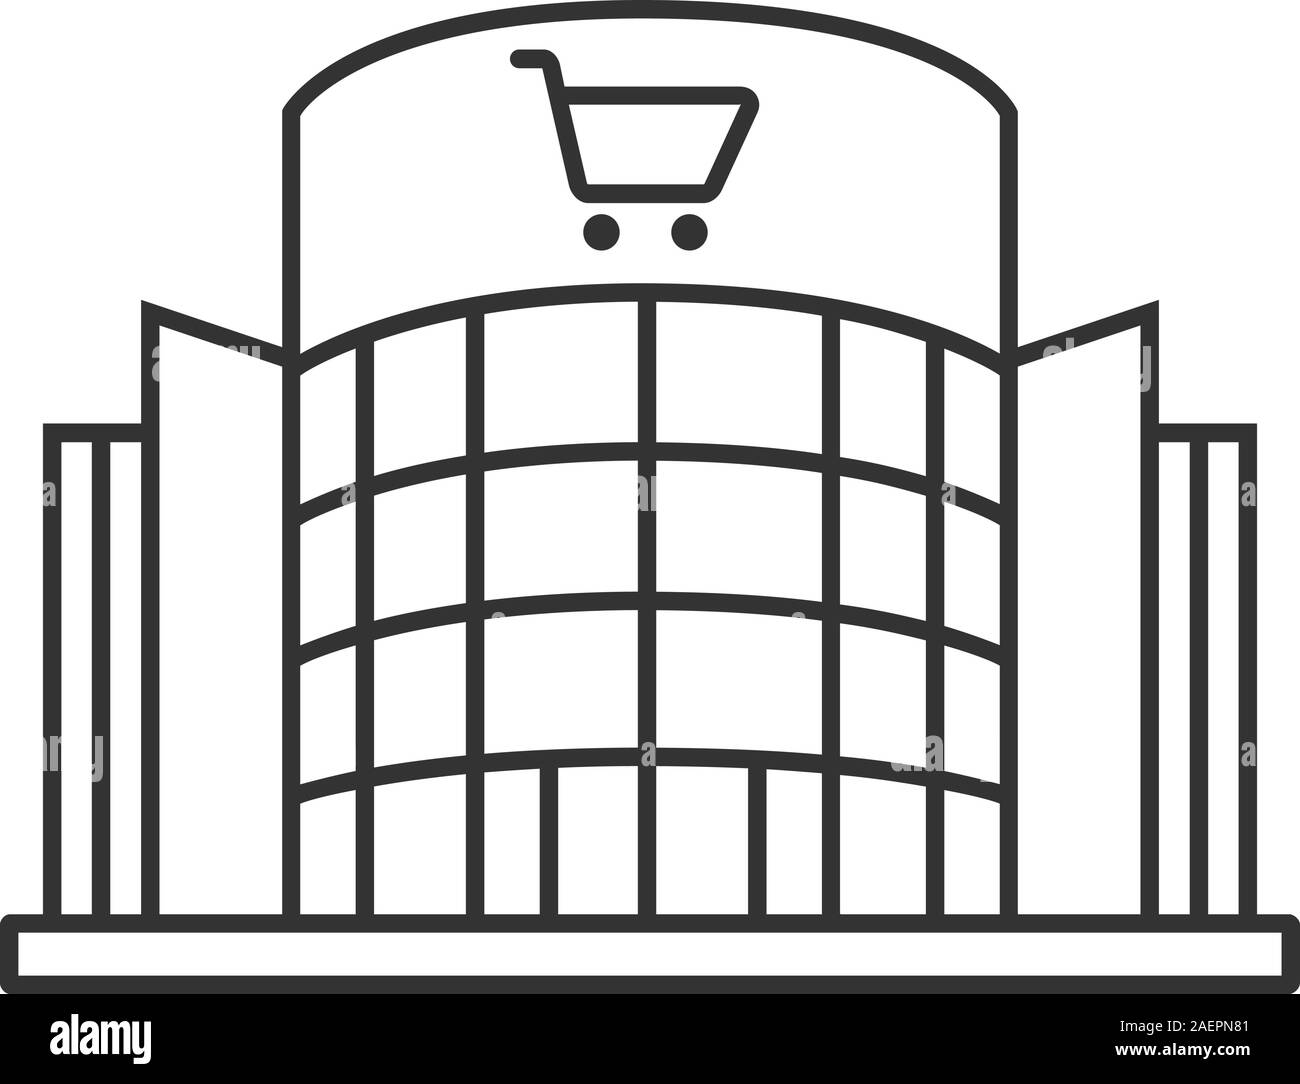 Shopping Center Drawing Easy - Jaapen 1b